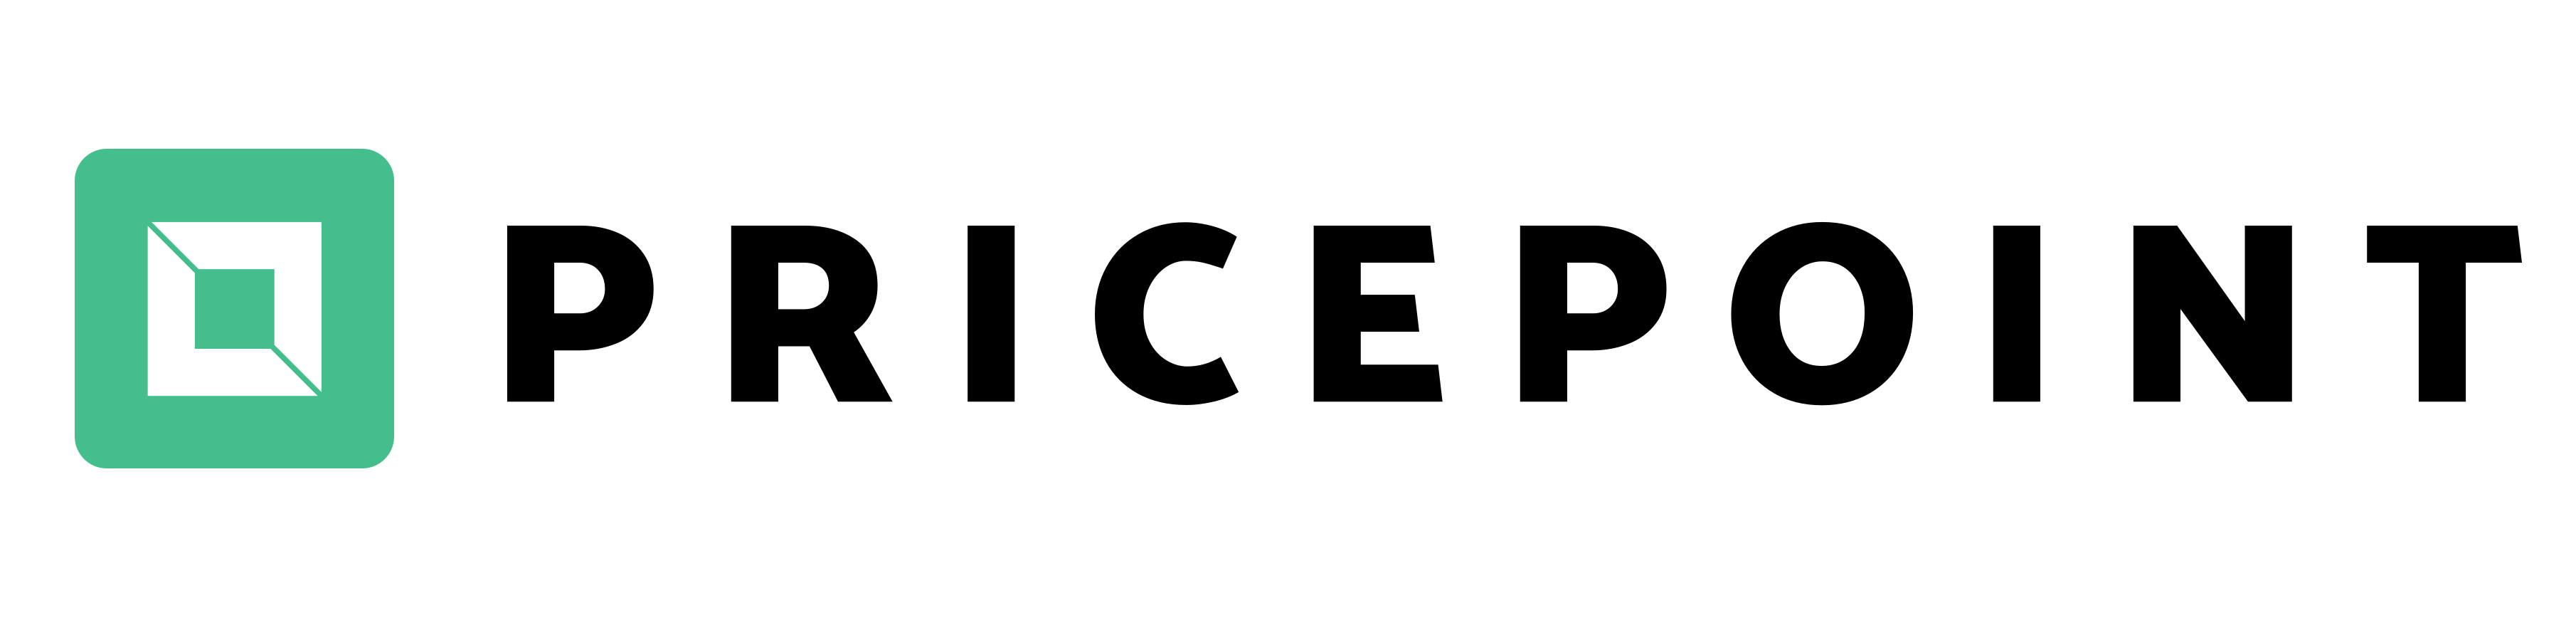 Pricepoint logo